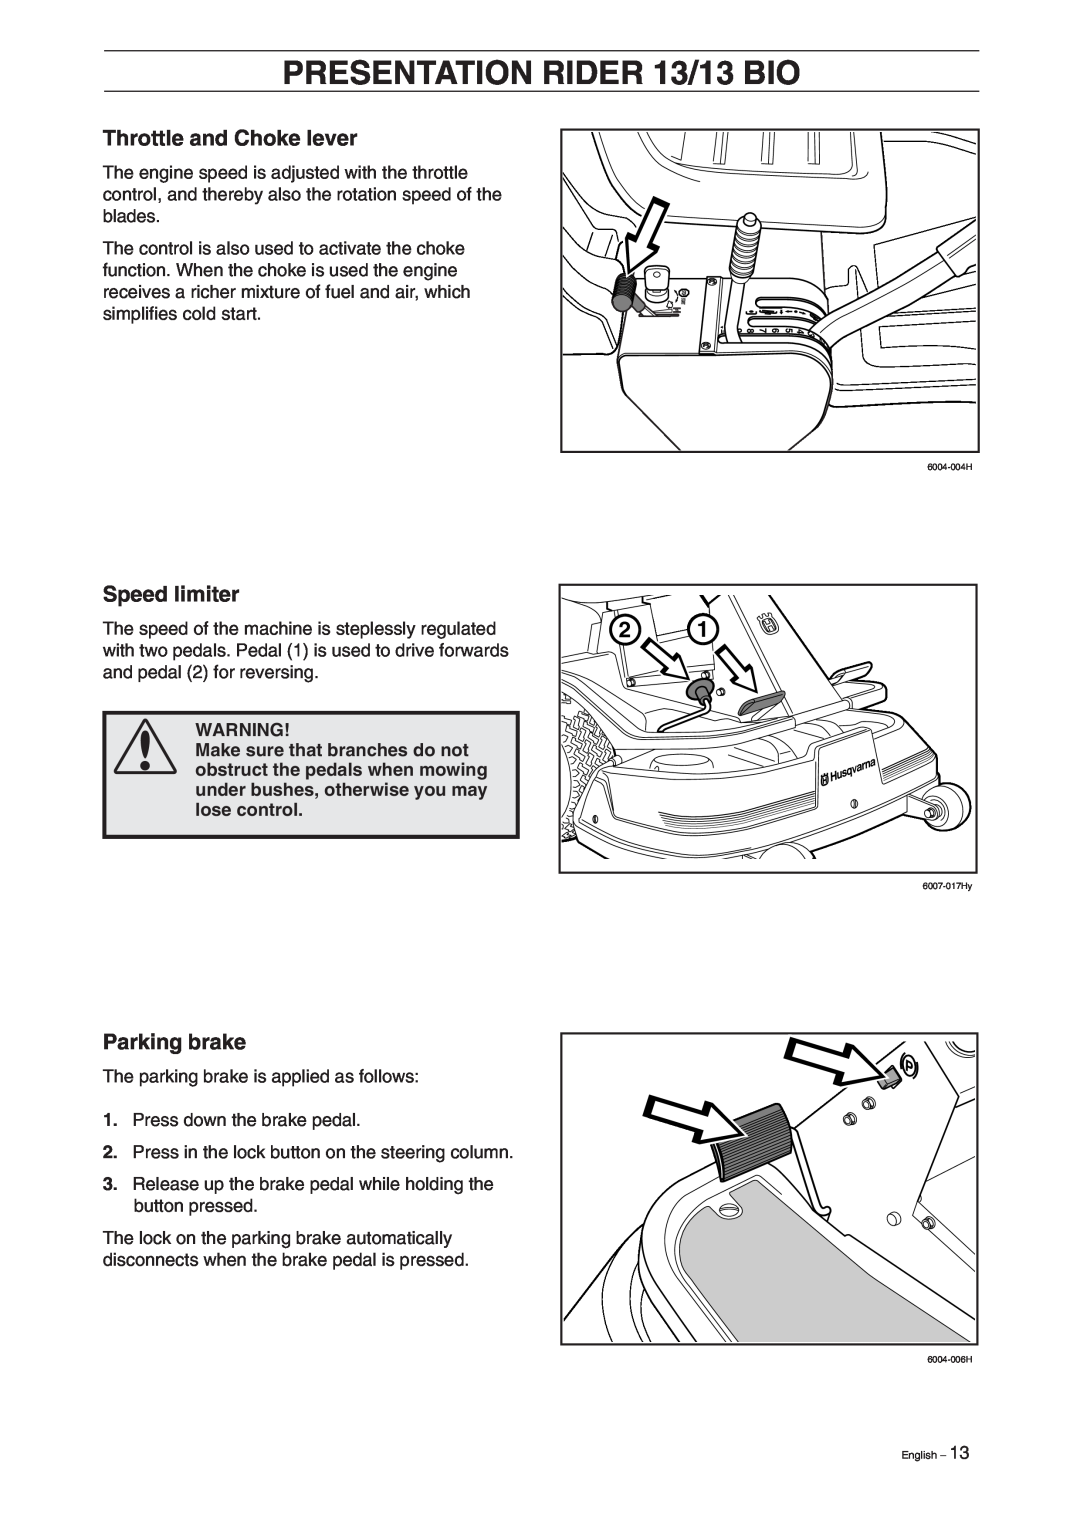 Husqvarna manual PRESENTATION RIDER 13/13 BIO, Speed limiter, Parking brake, Throttle and Choke lever, 6007-017Hy 